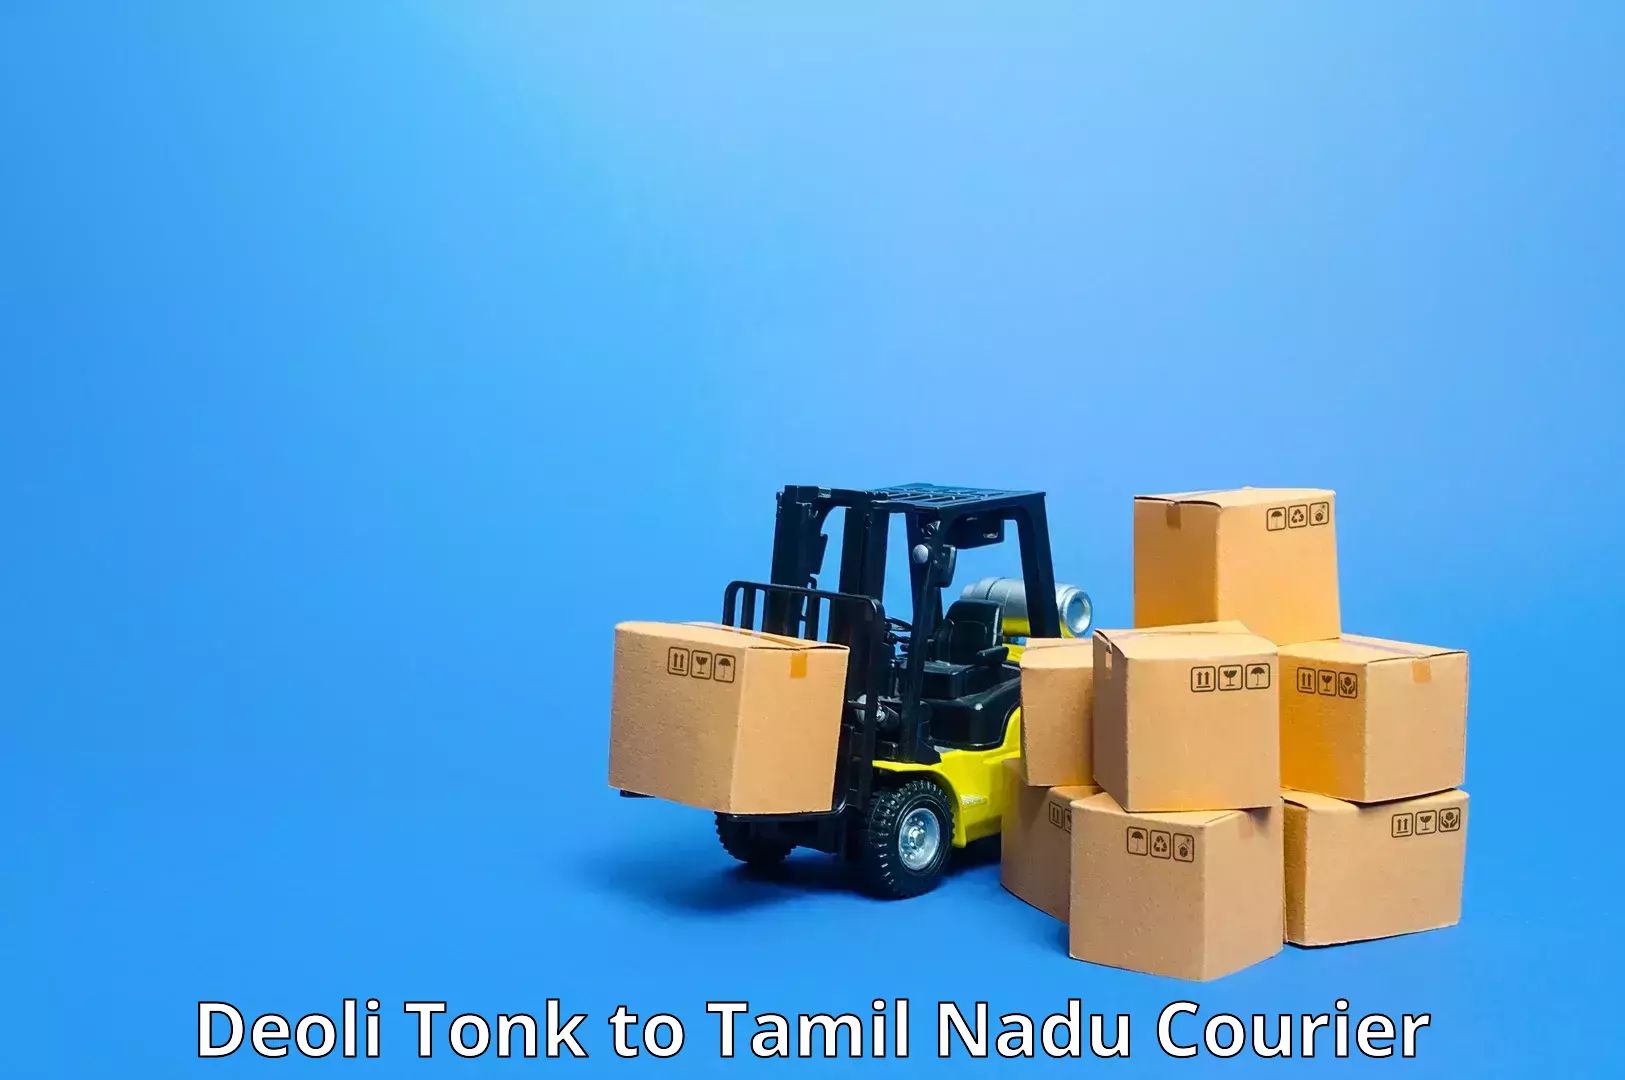 Courier service innovation Deoli Tonk to Tiruturaipundi